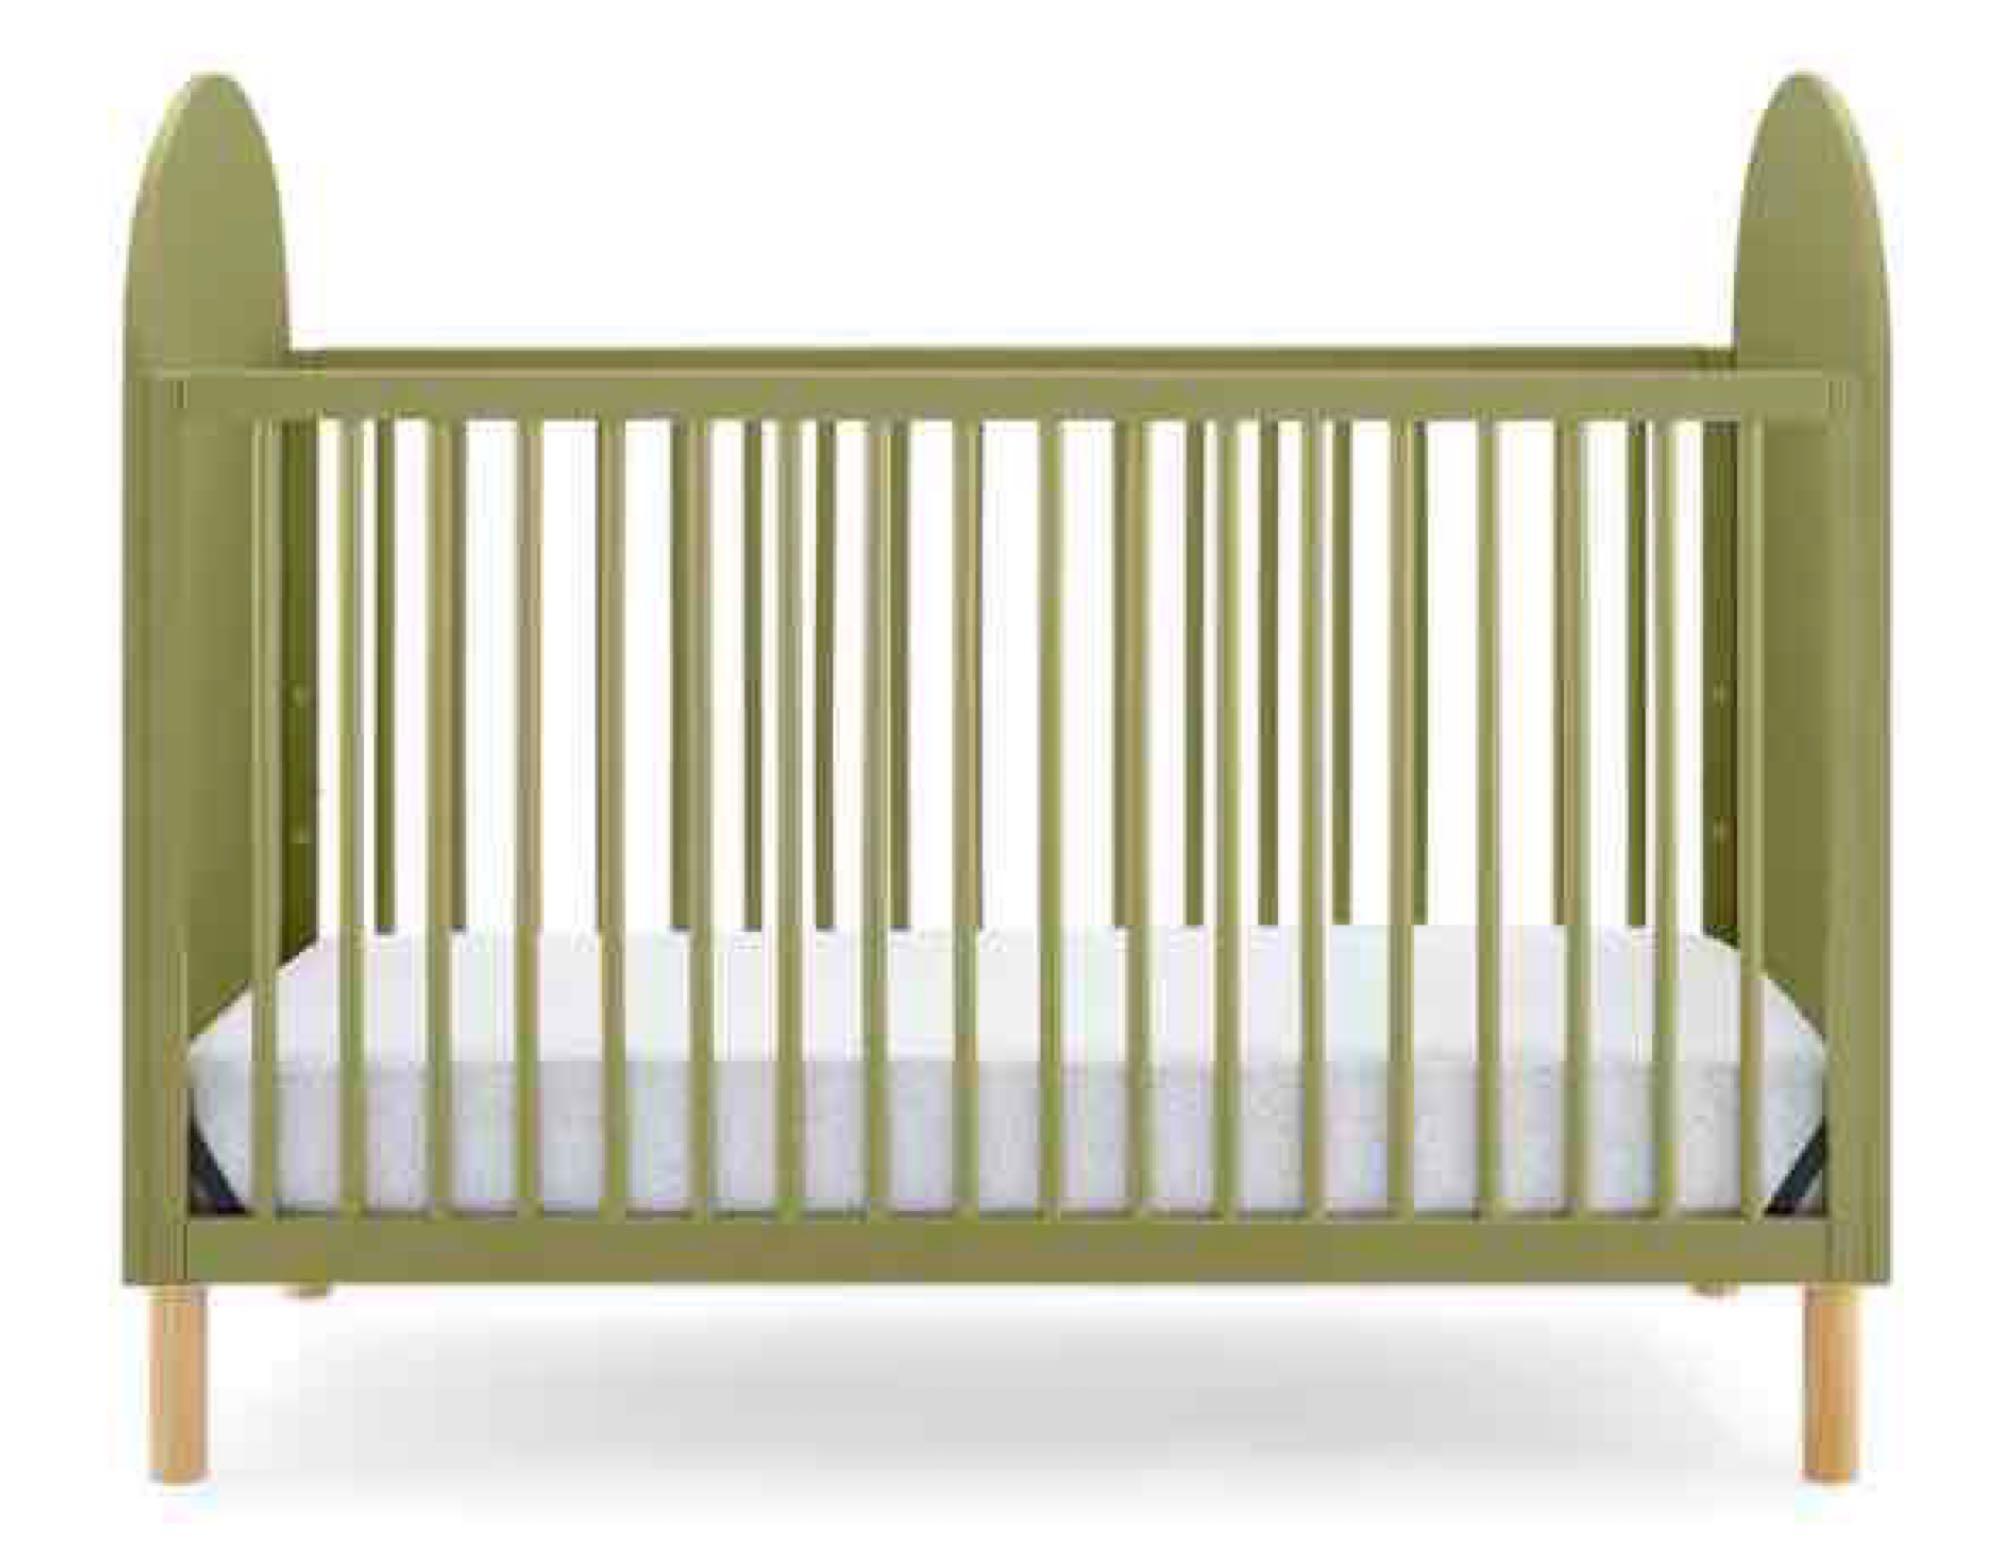 Delta Children Reese 4-in-1 Convertible Crib